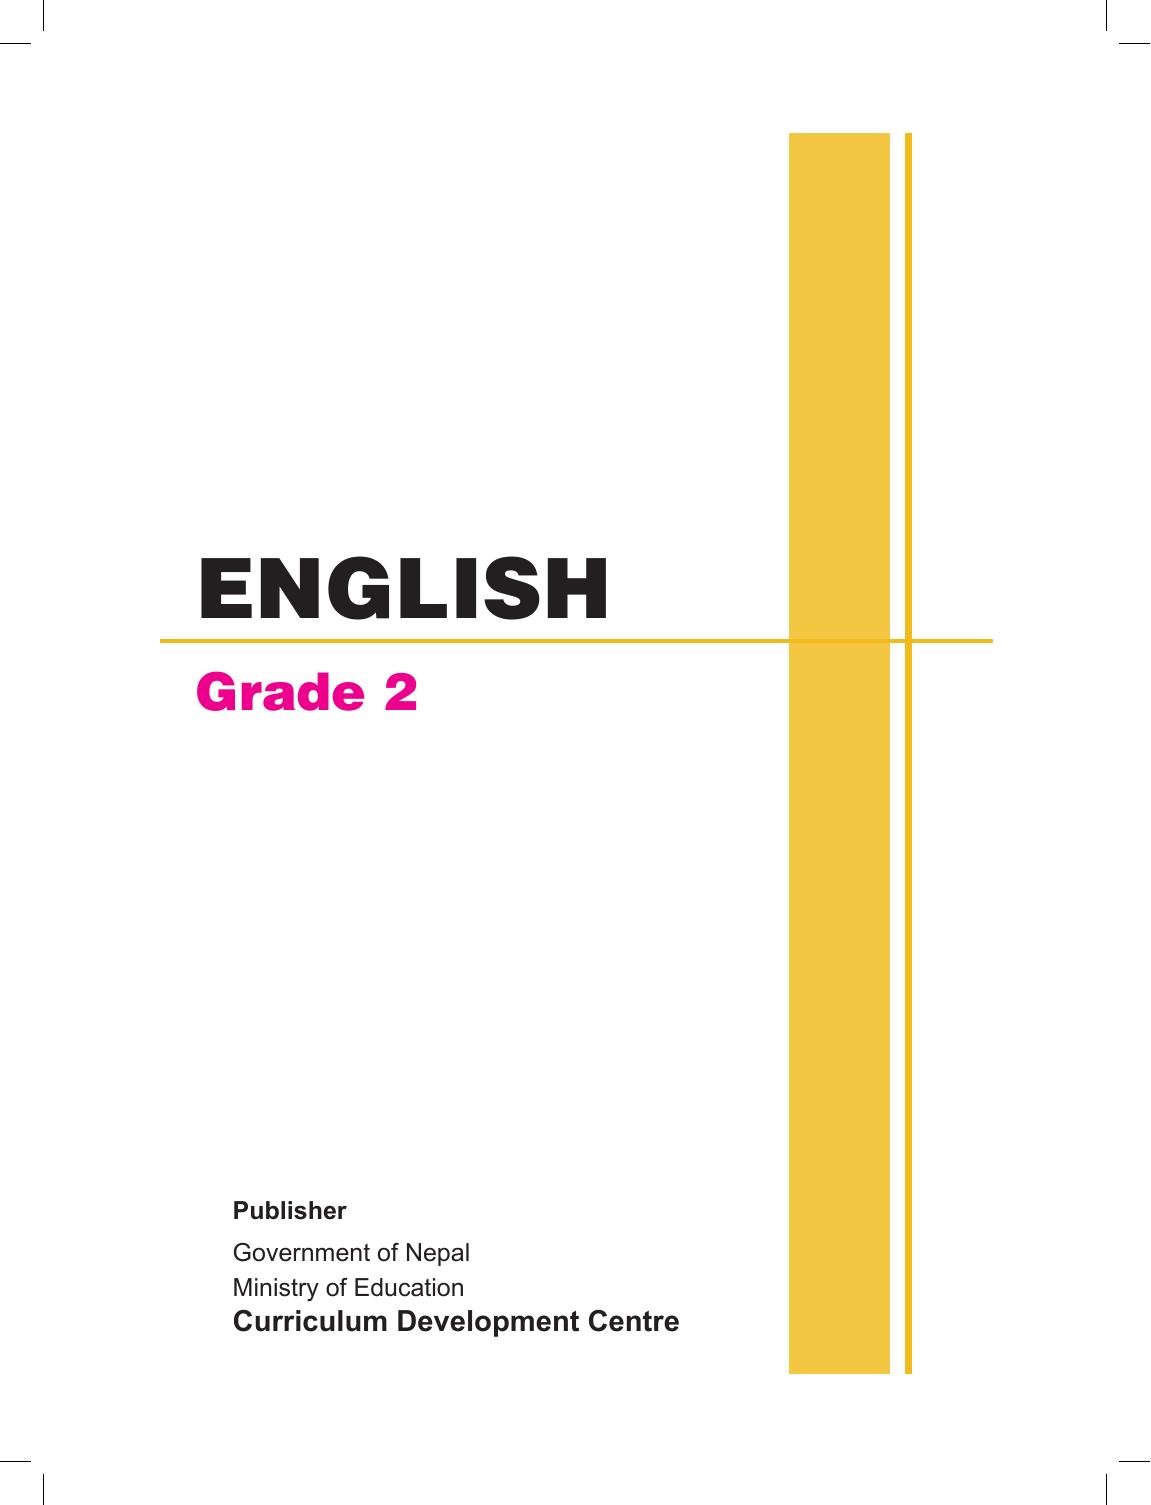 CDC 2017 - English Grade 2